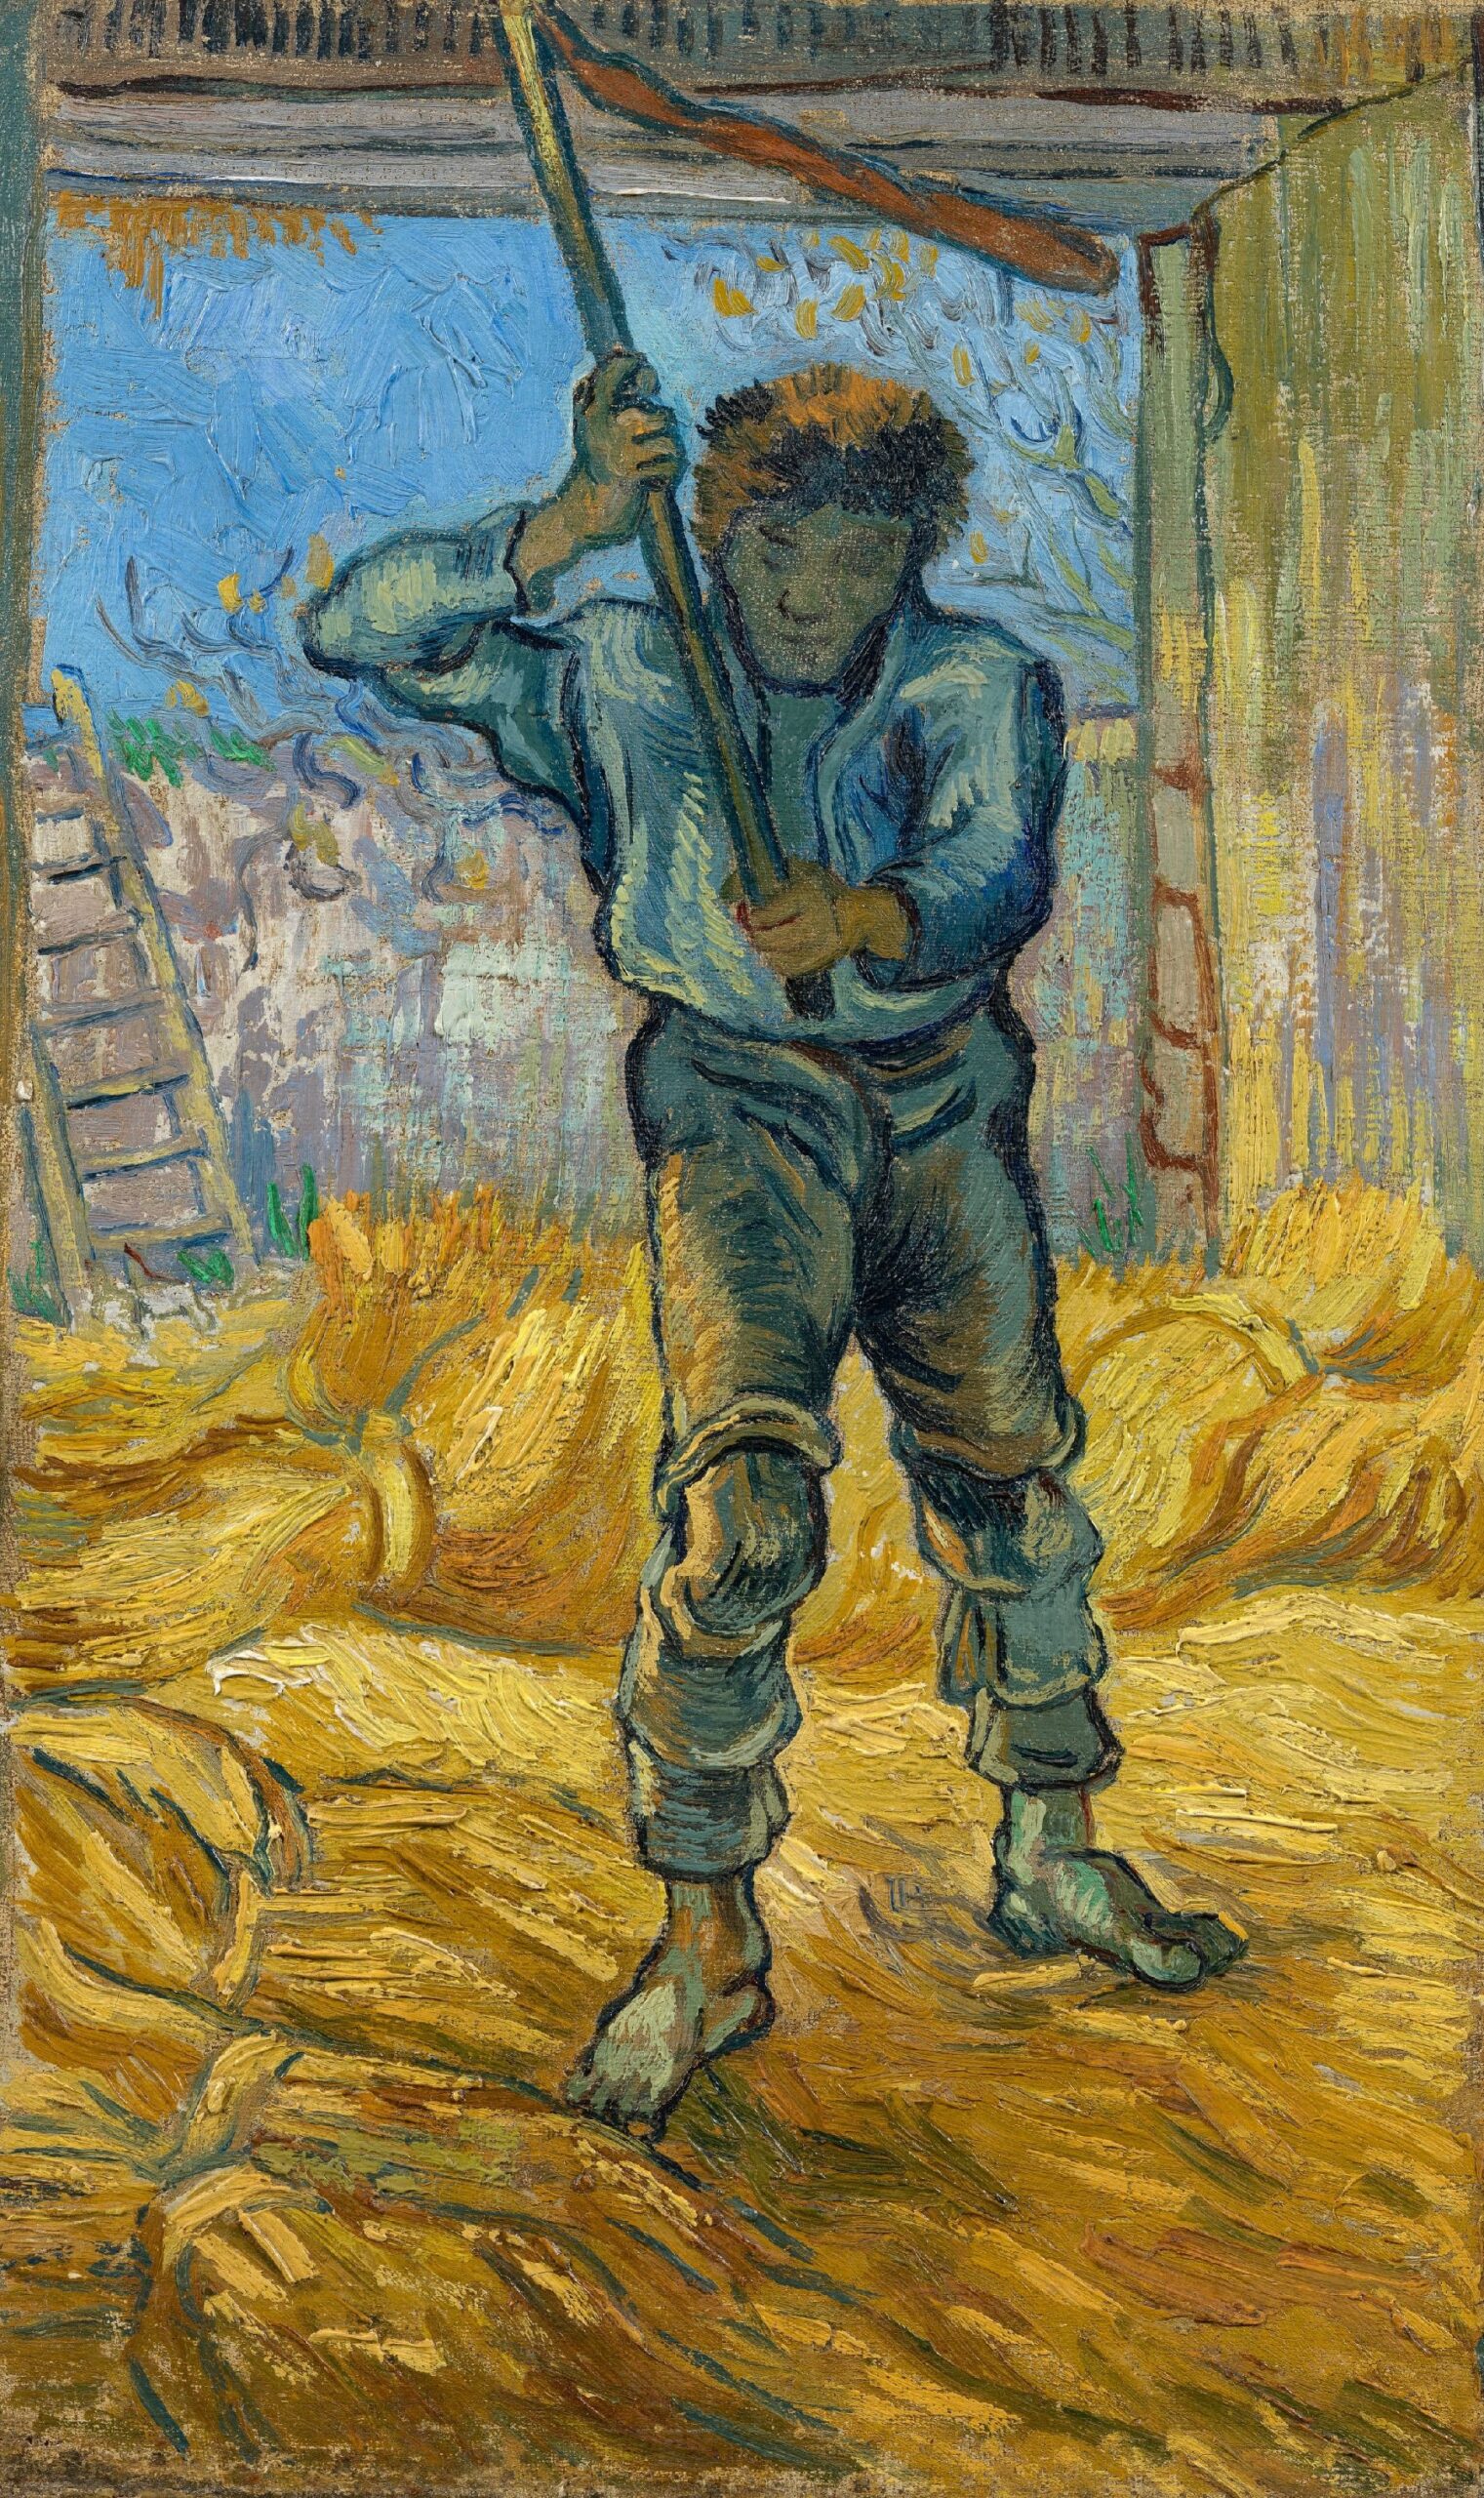 De dorser (naar Millet) Vincent van Gogh (1853 - 1890), Saint-Rémy-de-Provence, september 1889